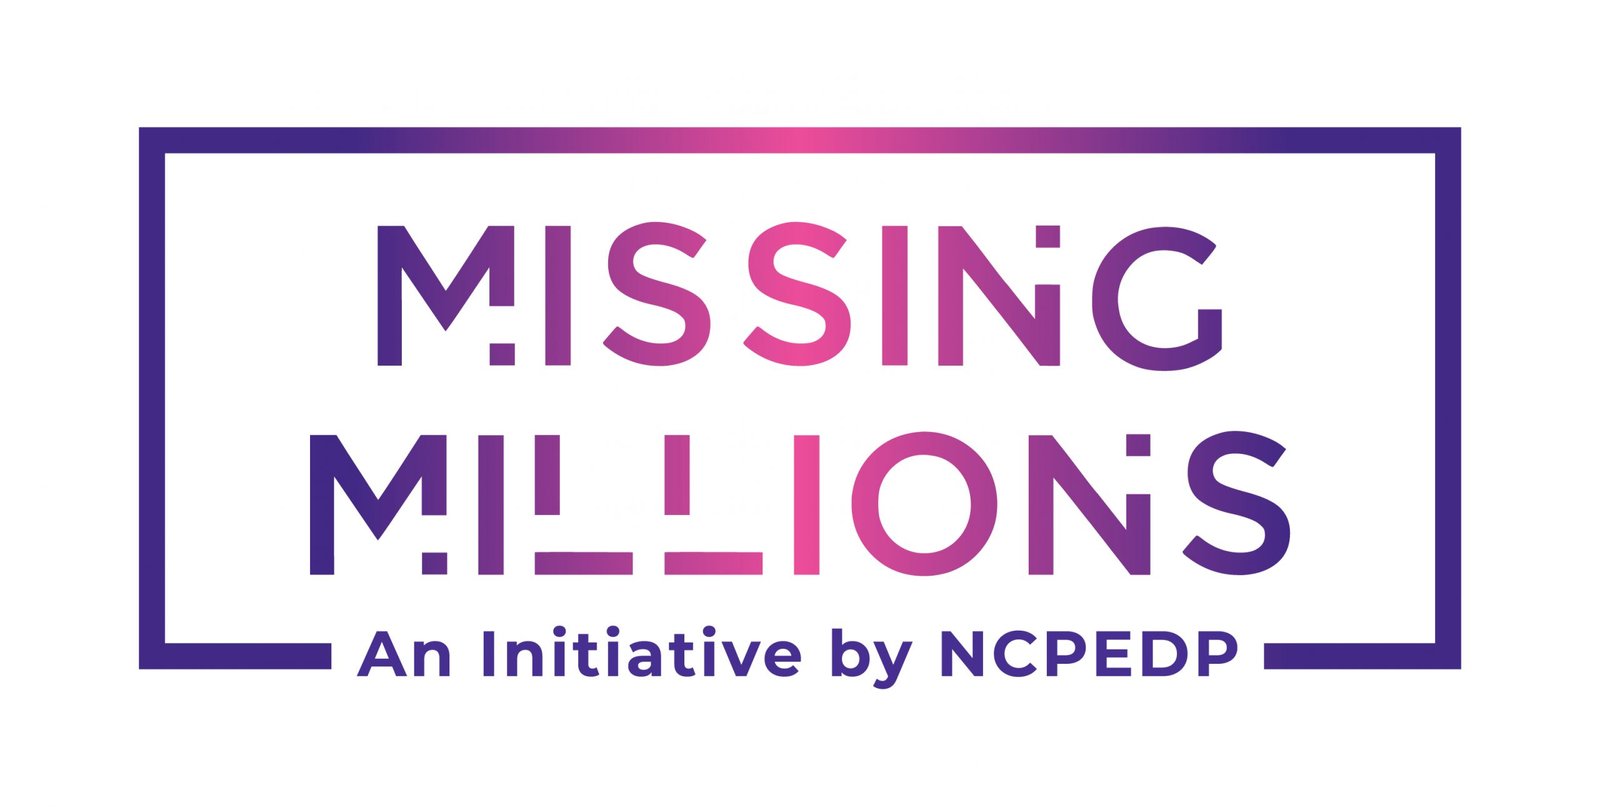 Logo - Missing Million Campaign